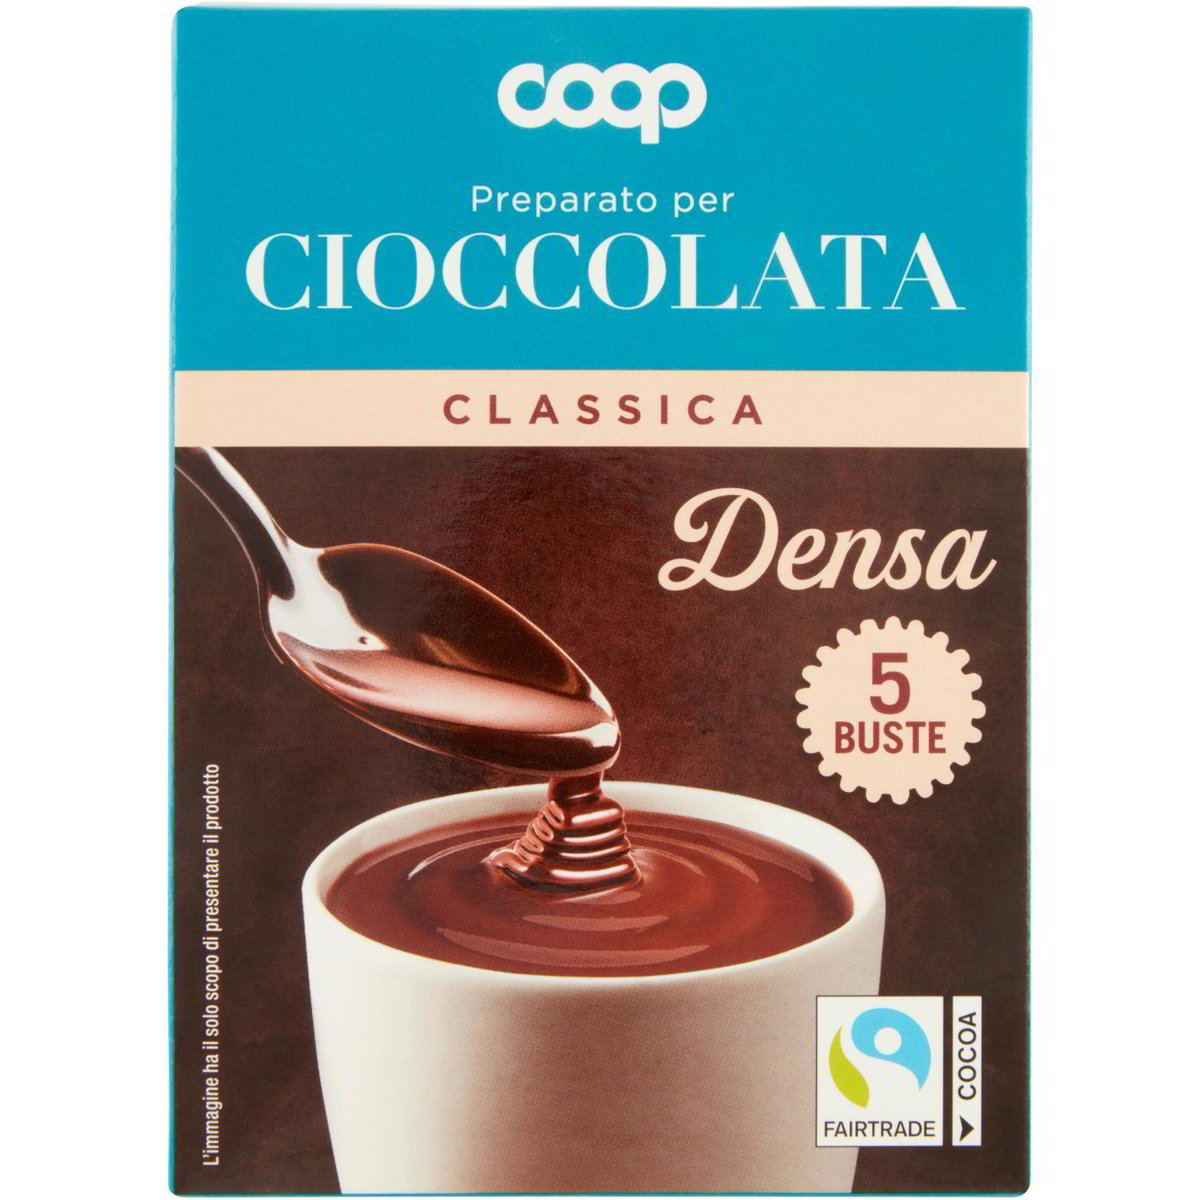 Preparato per cioccolata classica densa COOP 5 X 25 G - Coop Shop